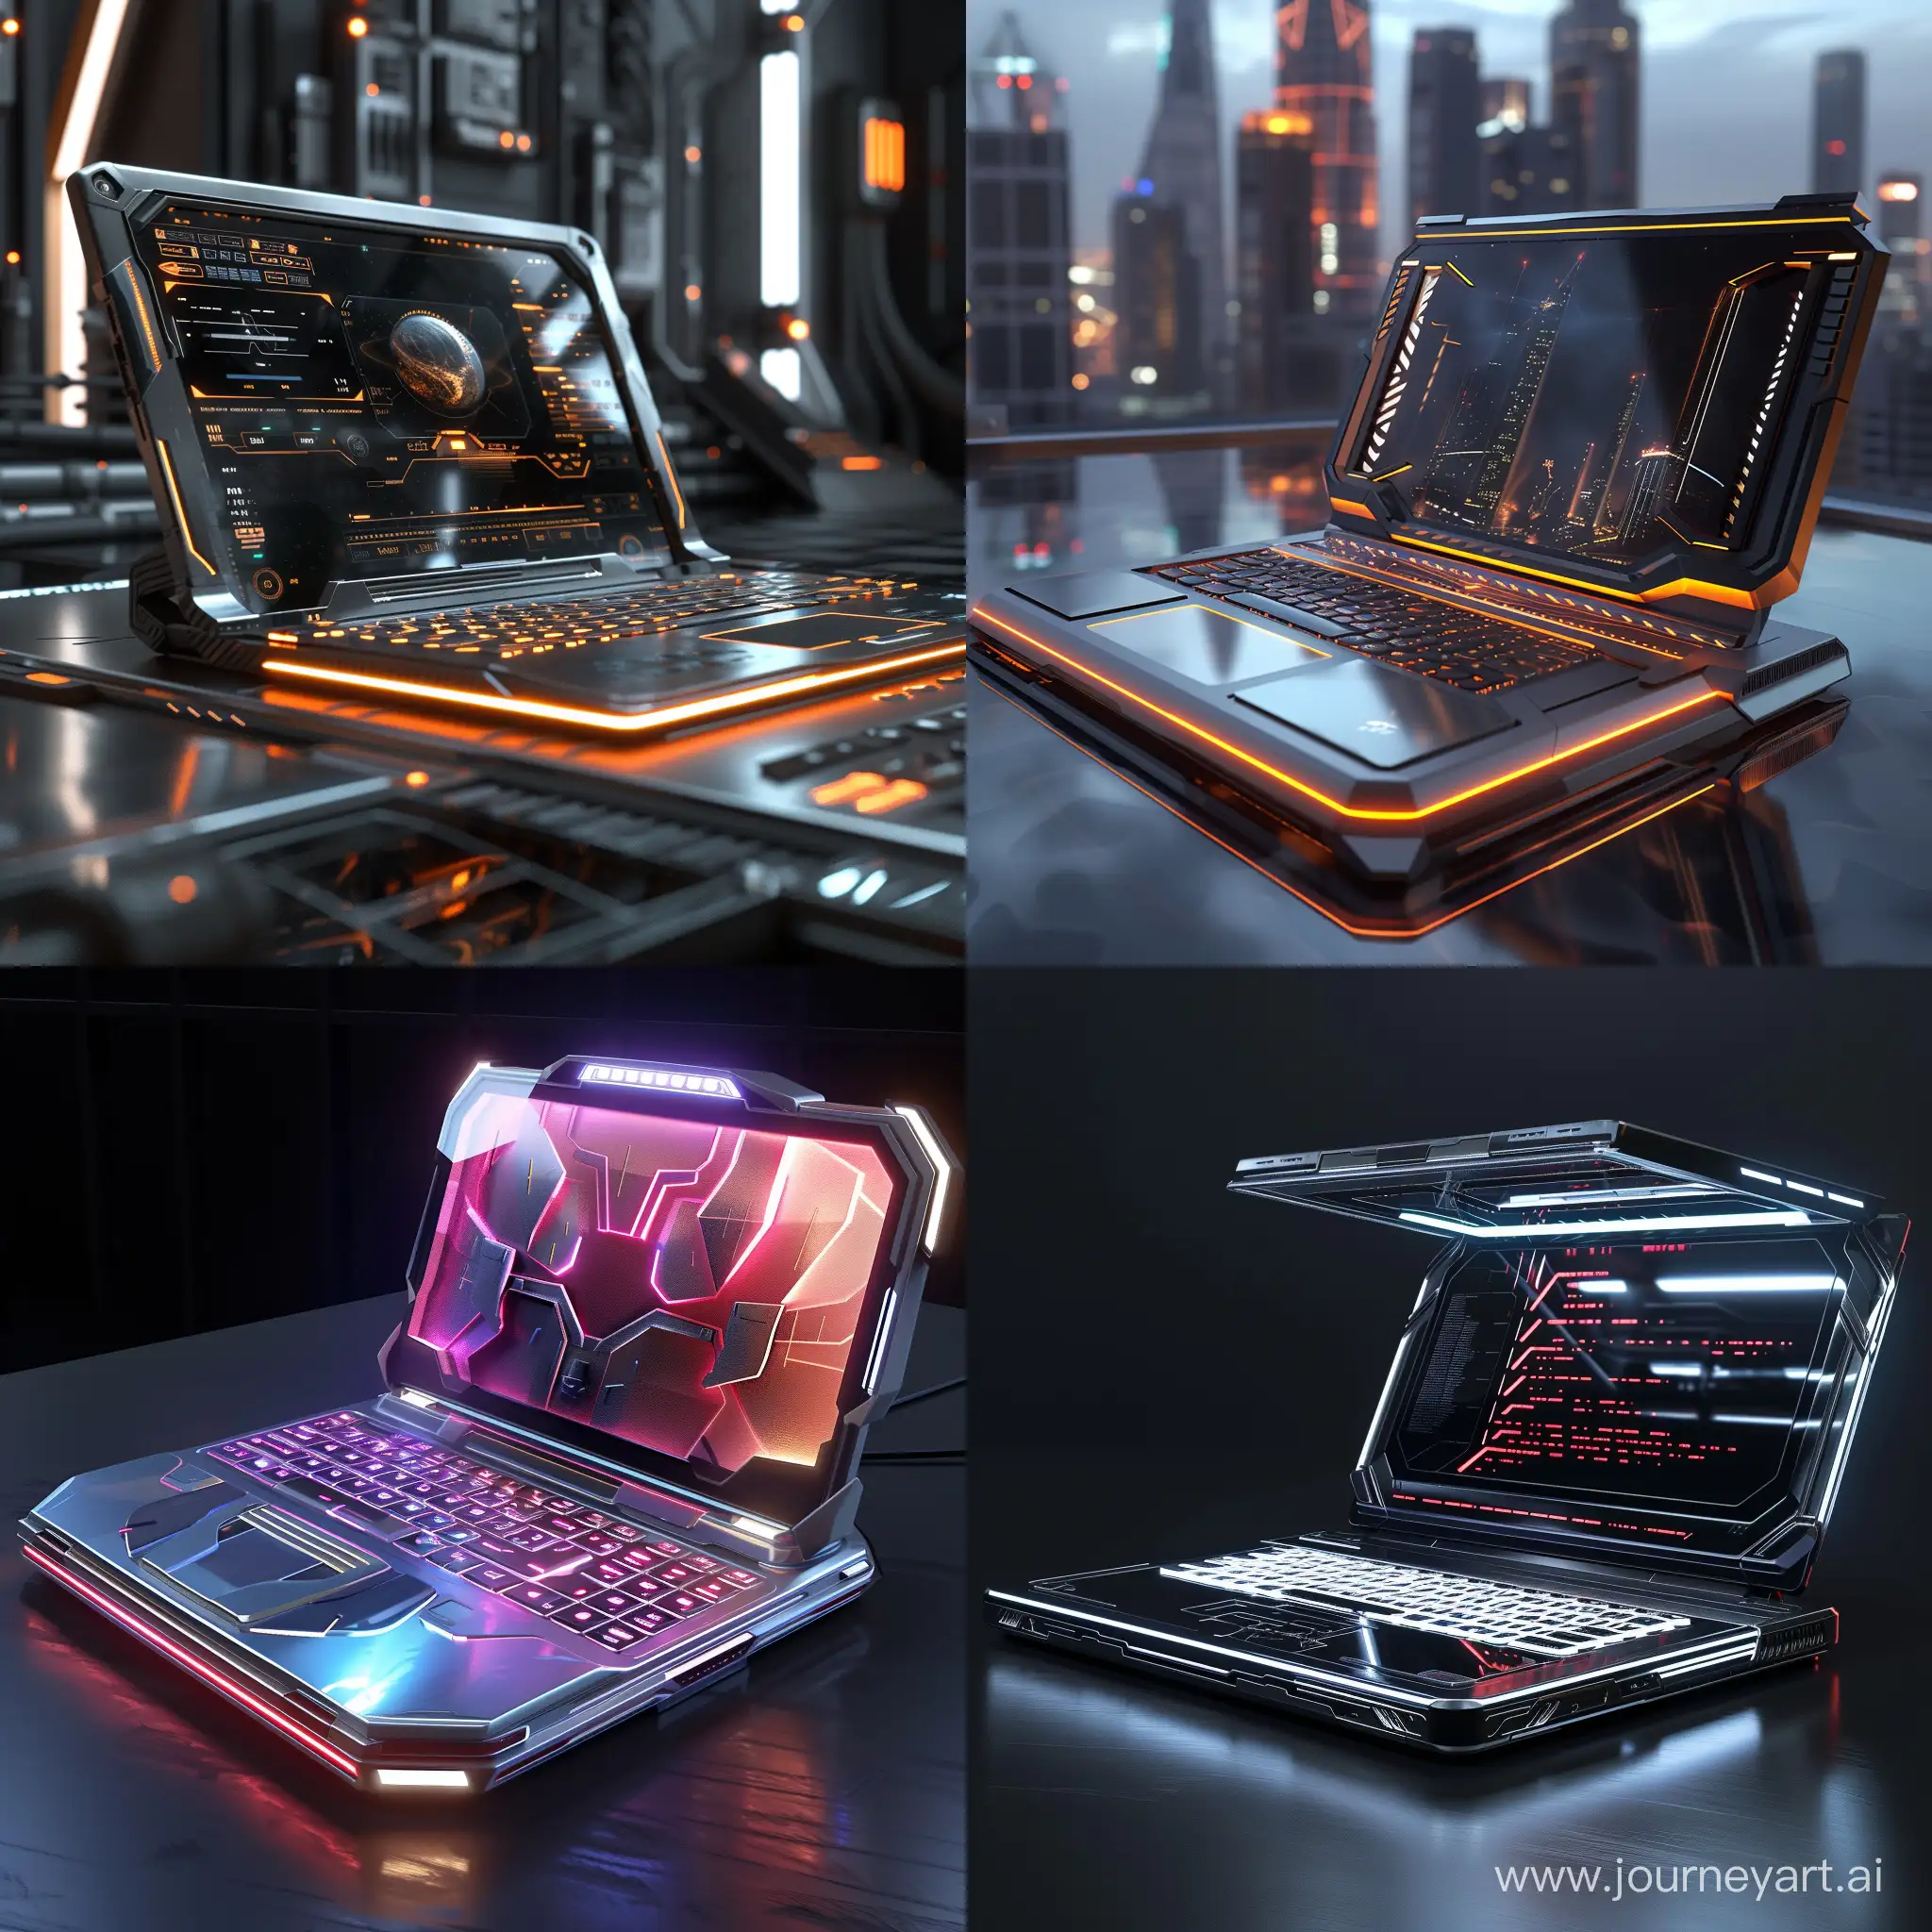 Futuristic-Composite-Laptop-with-Octane-Render-HighTech-Digital-Innovation